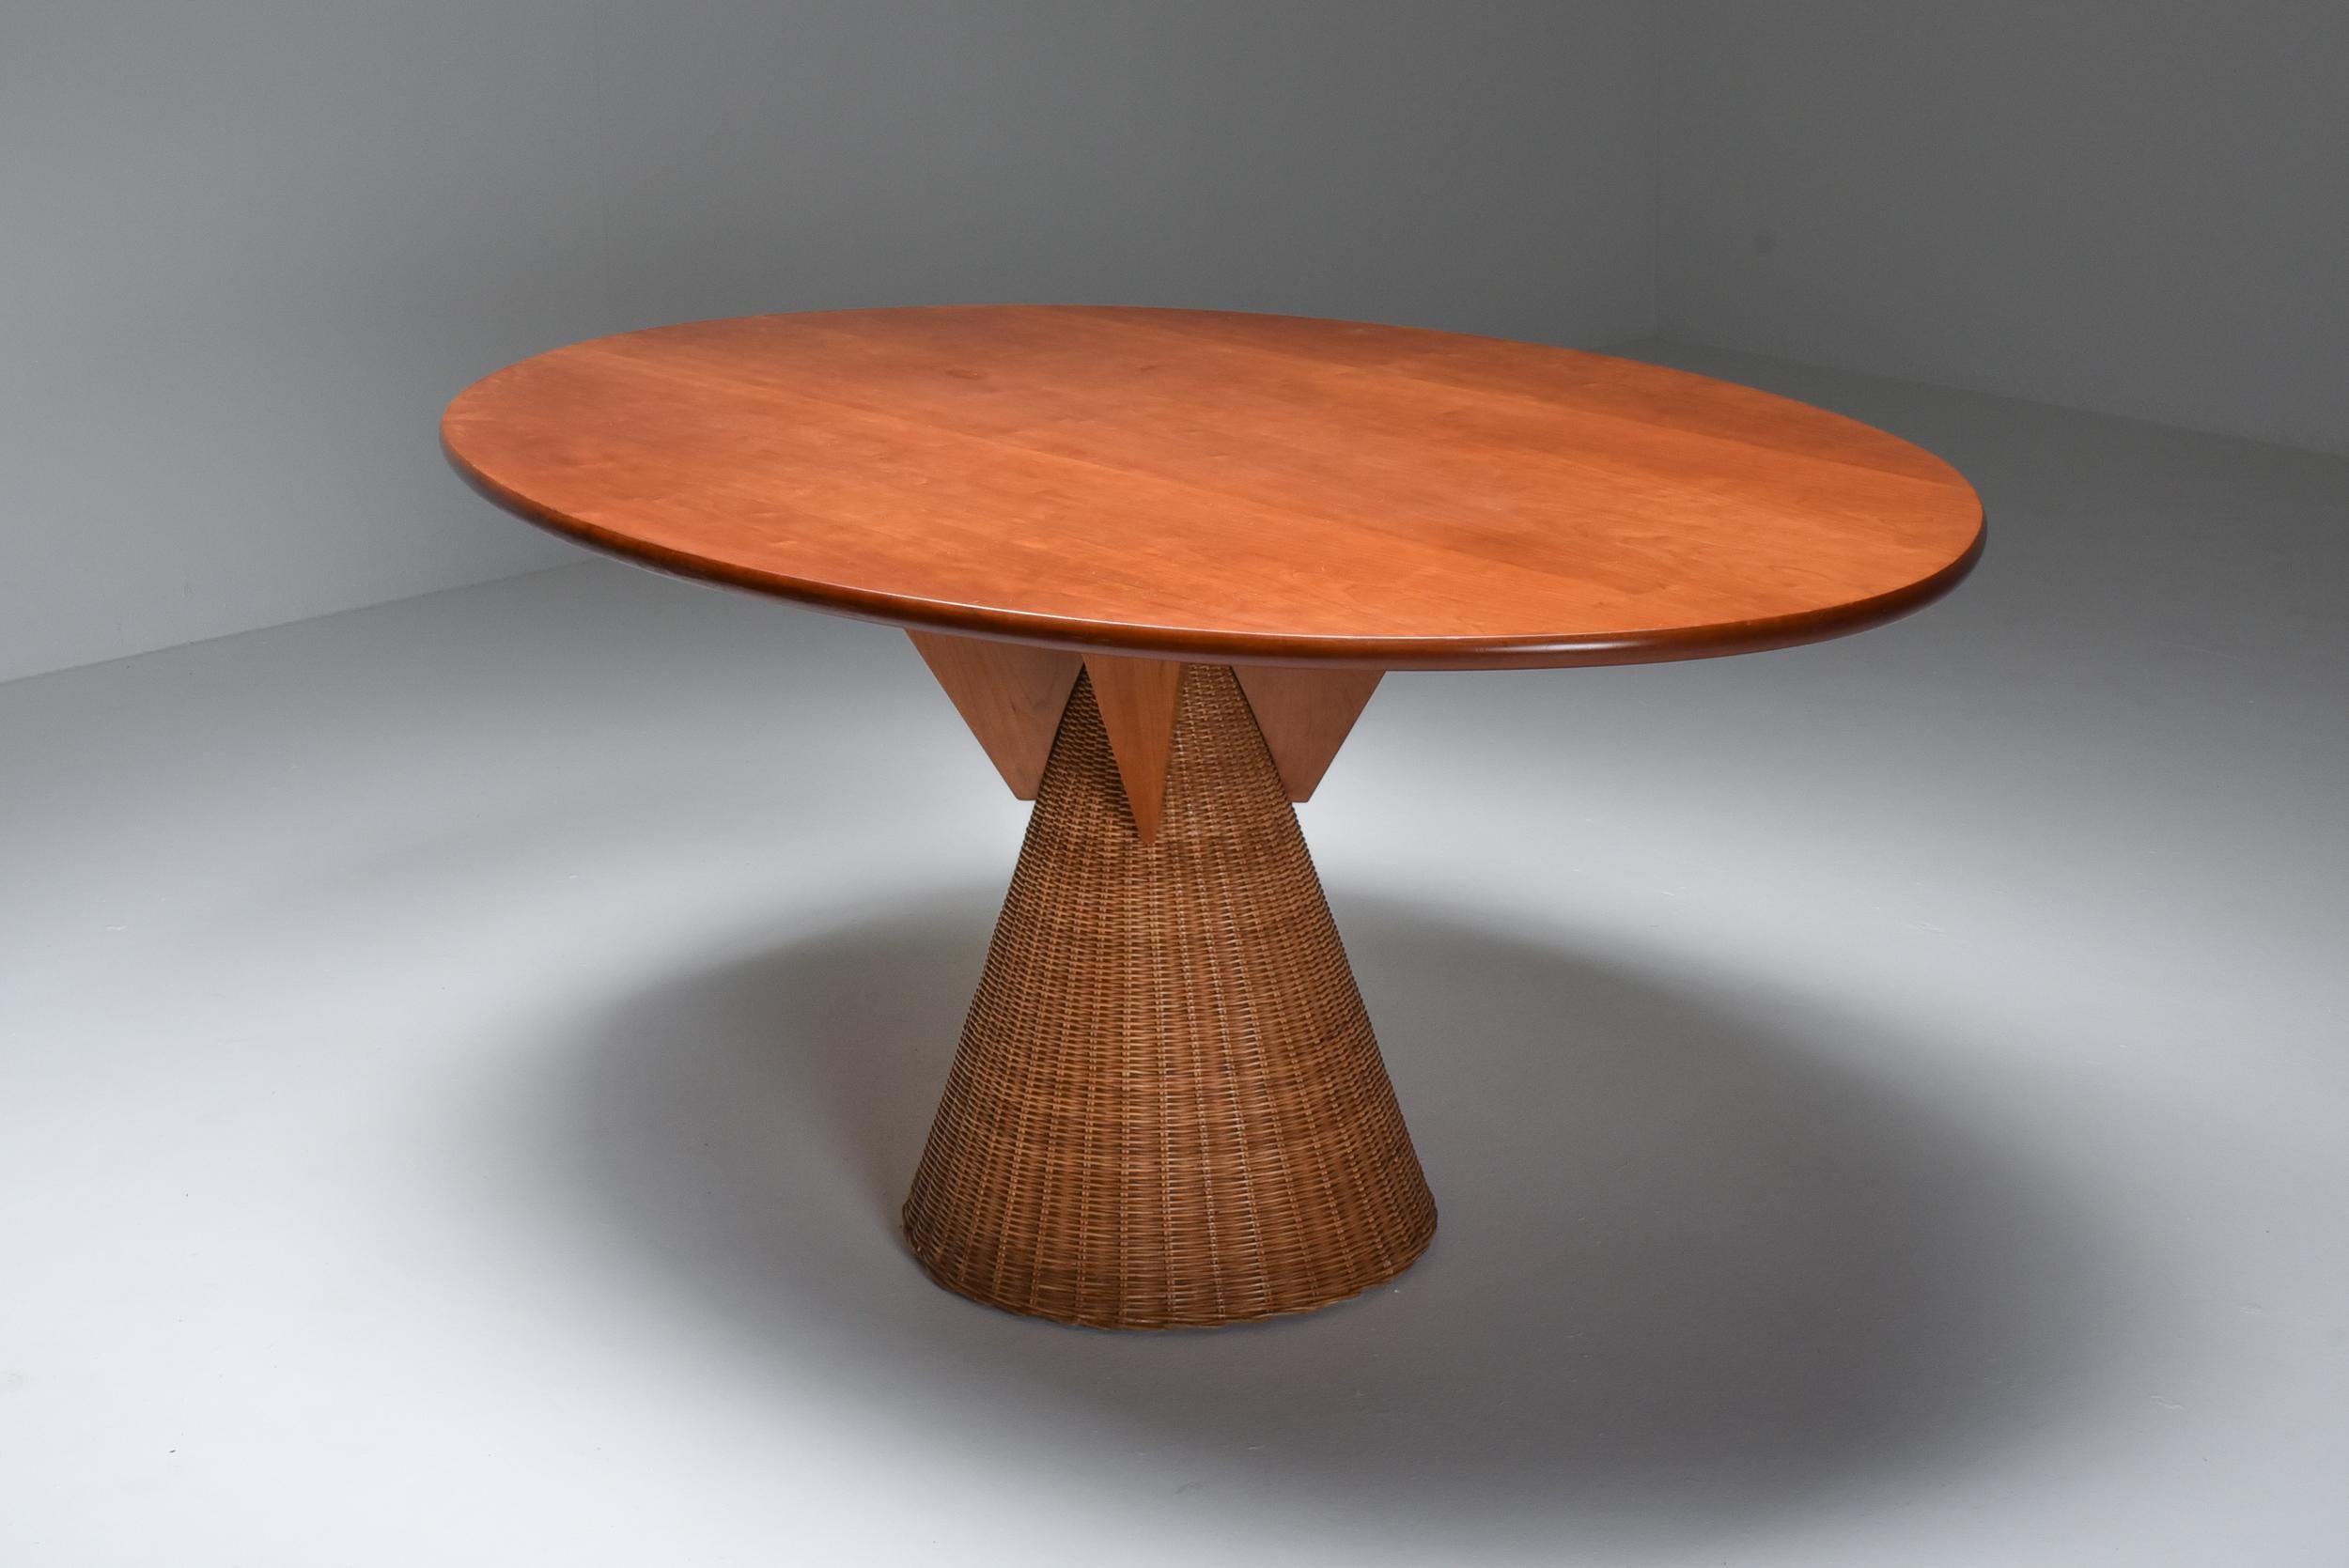 Post-Modern Italian Design Oval Mid-Century Modern Dining Table on a Rattan Base